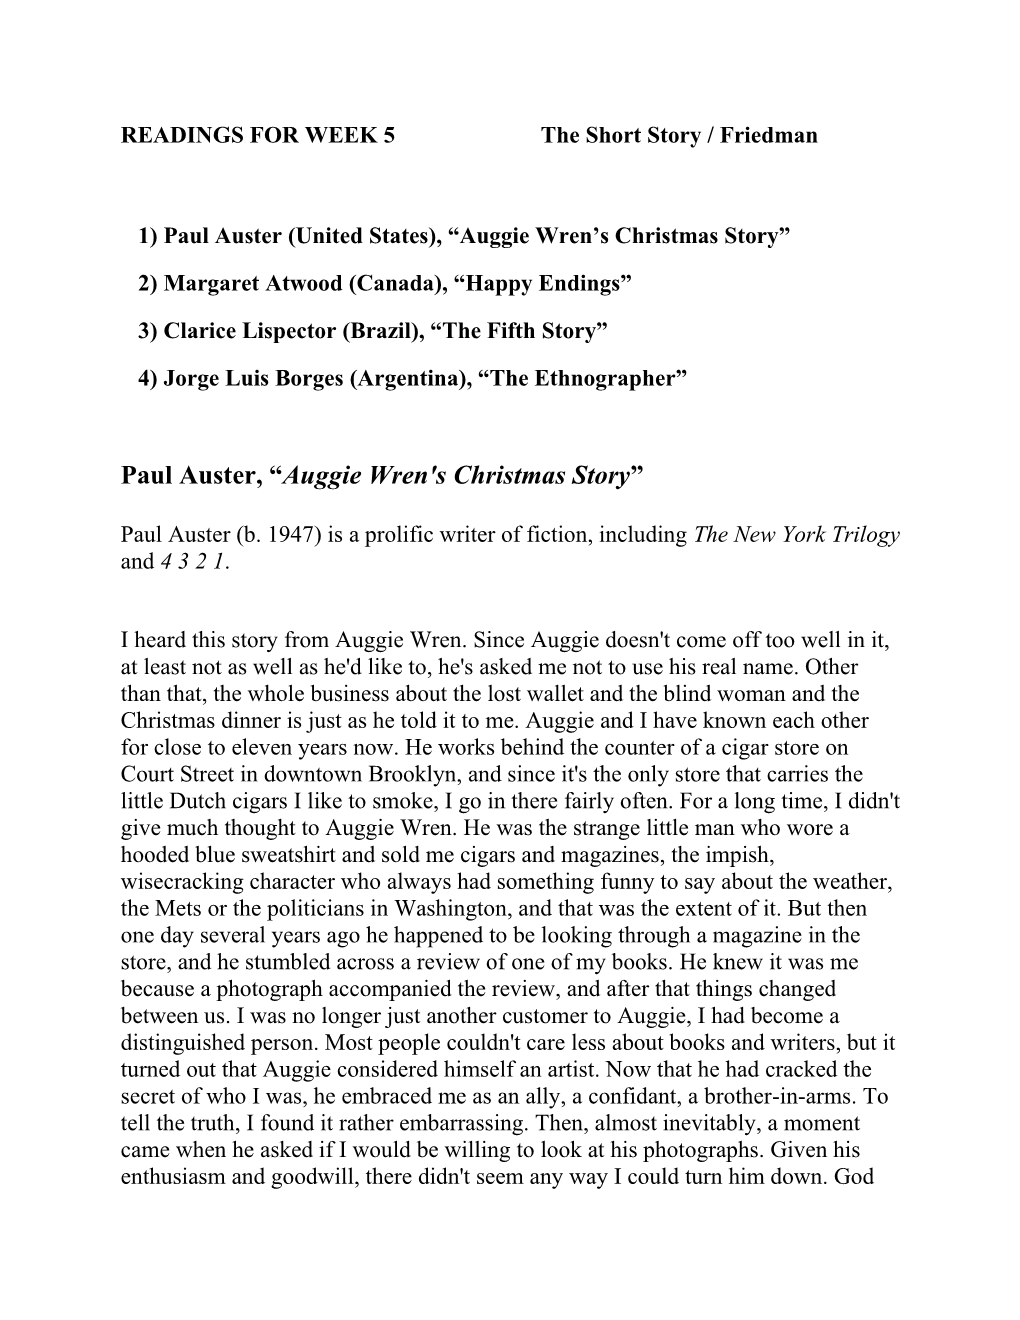 Auggie Wren's Christmas Story”